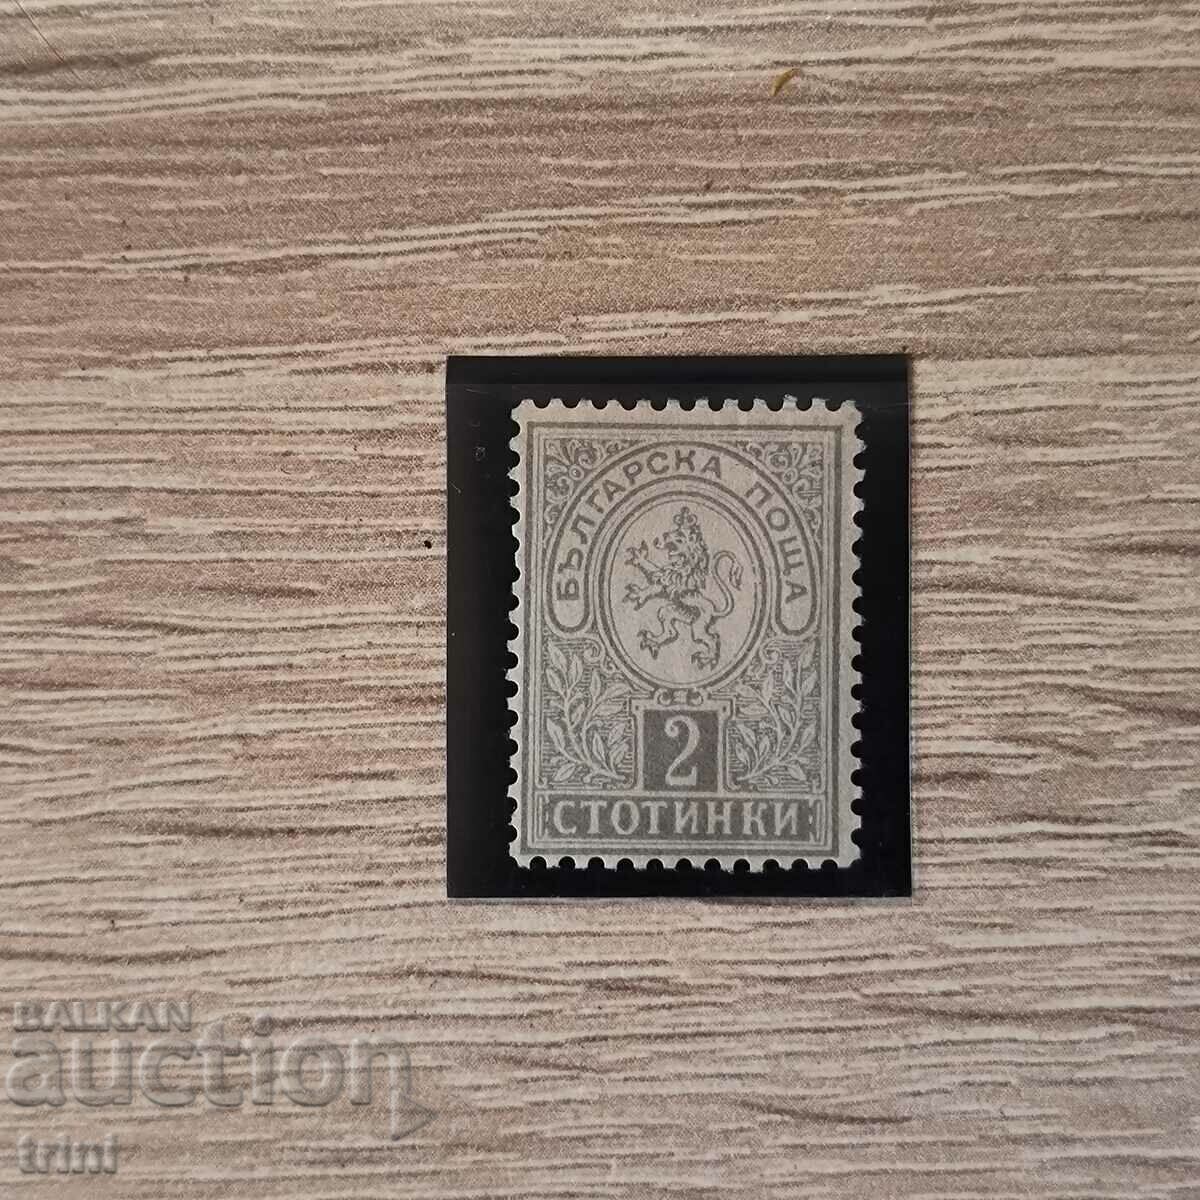 Bulgaria Small Lion 1889 2 cents καθαρό, με λάστιχο